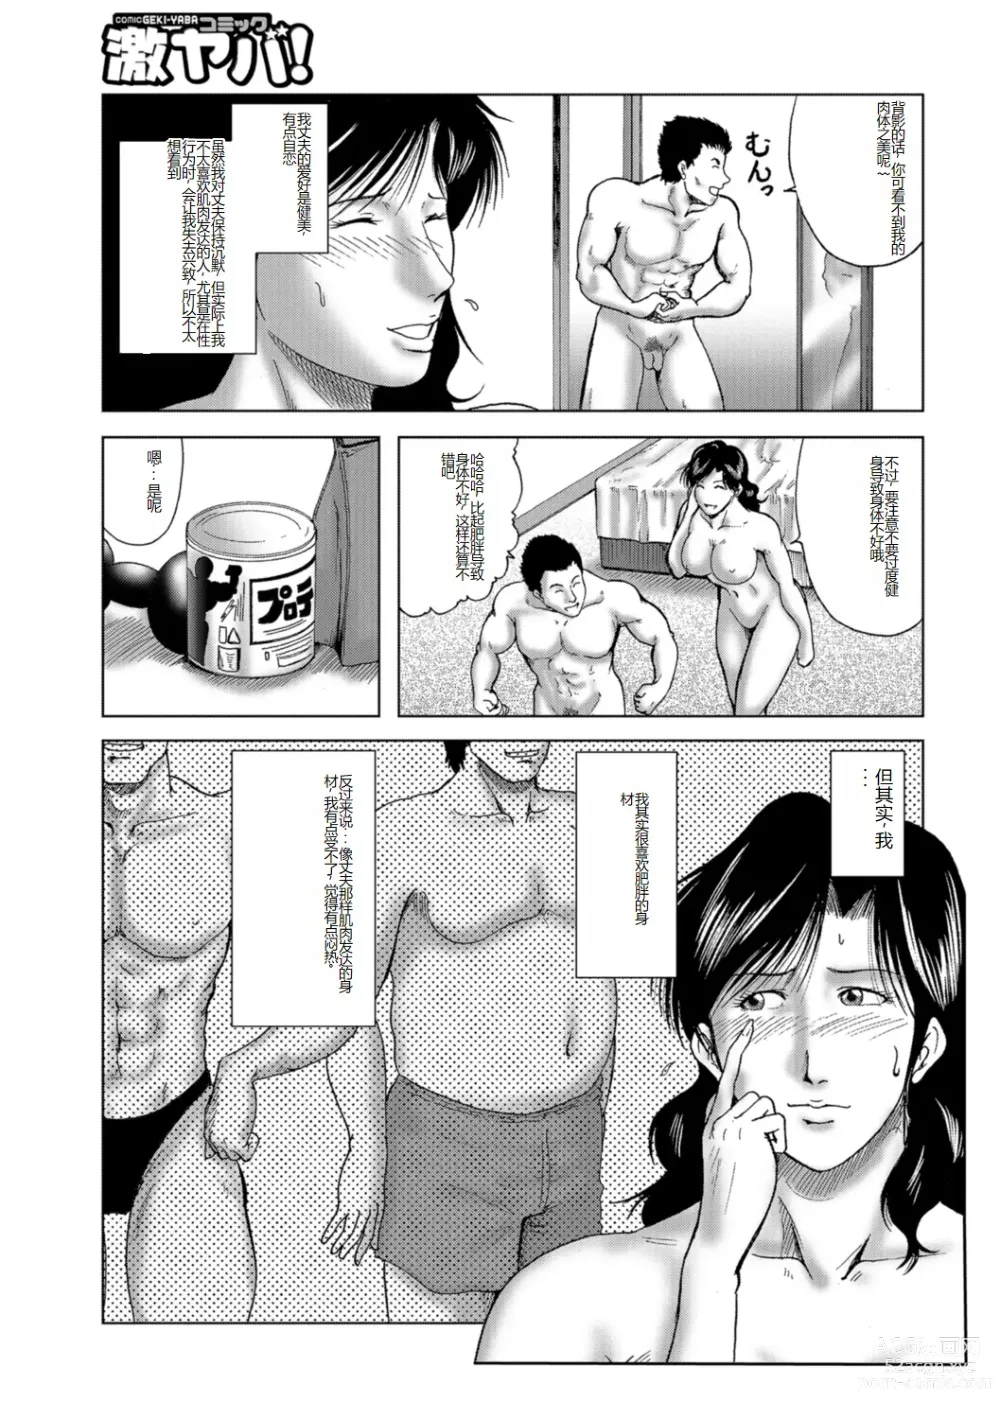 Page 21 of manga Misoji Uwakiduma 01